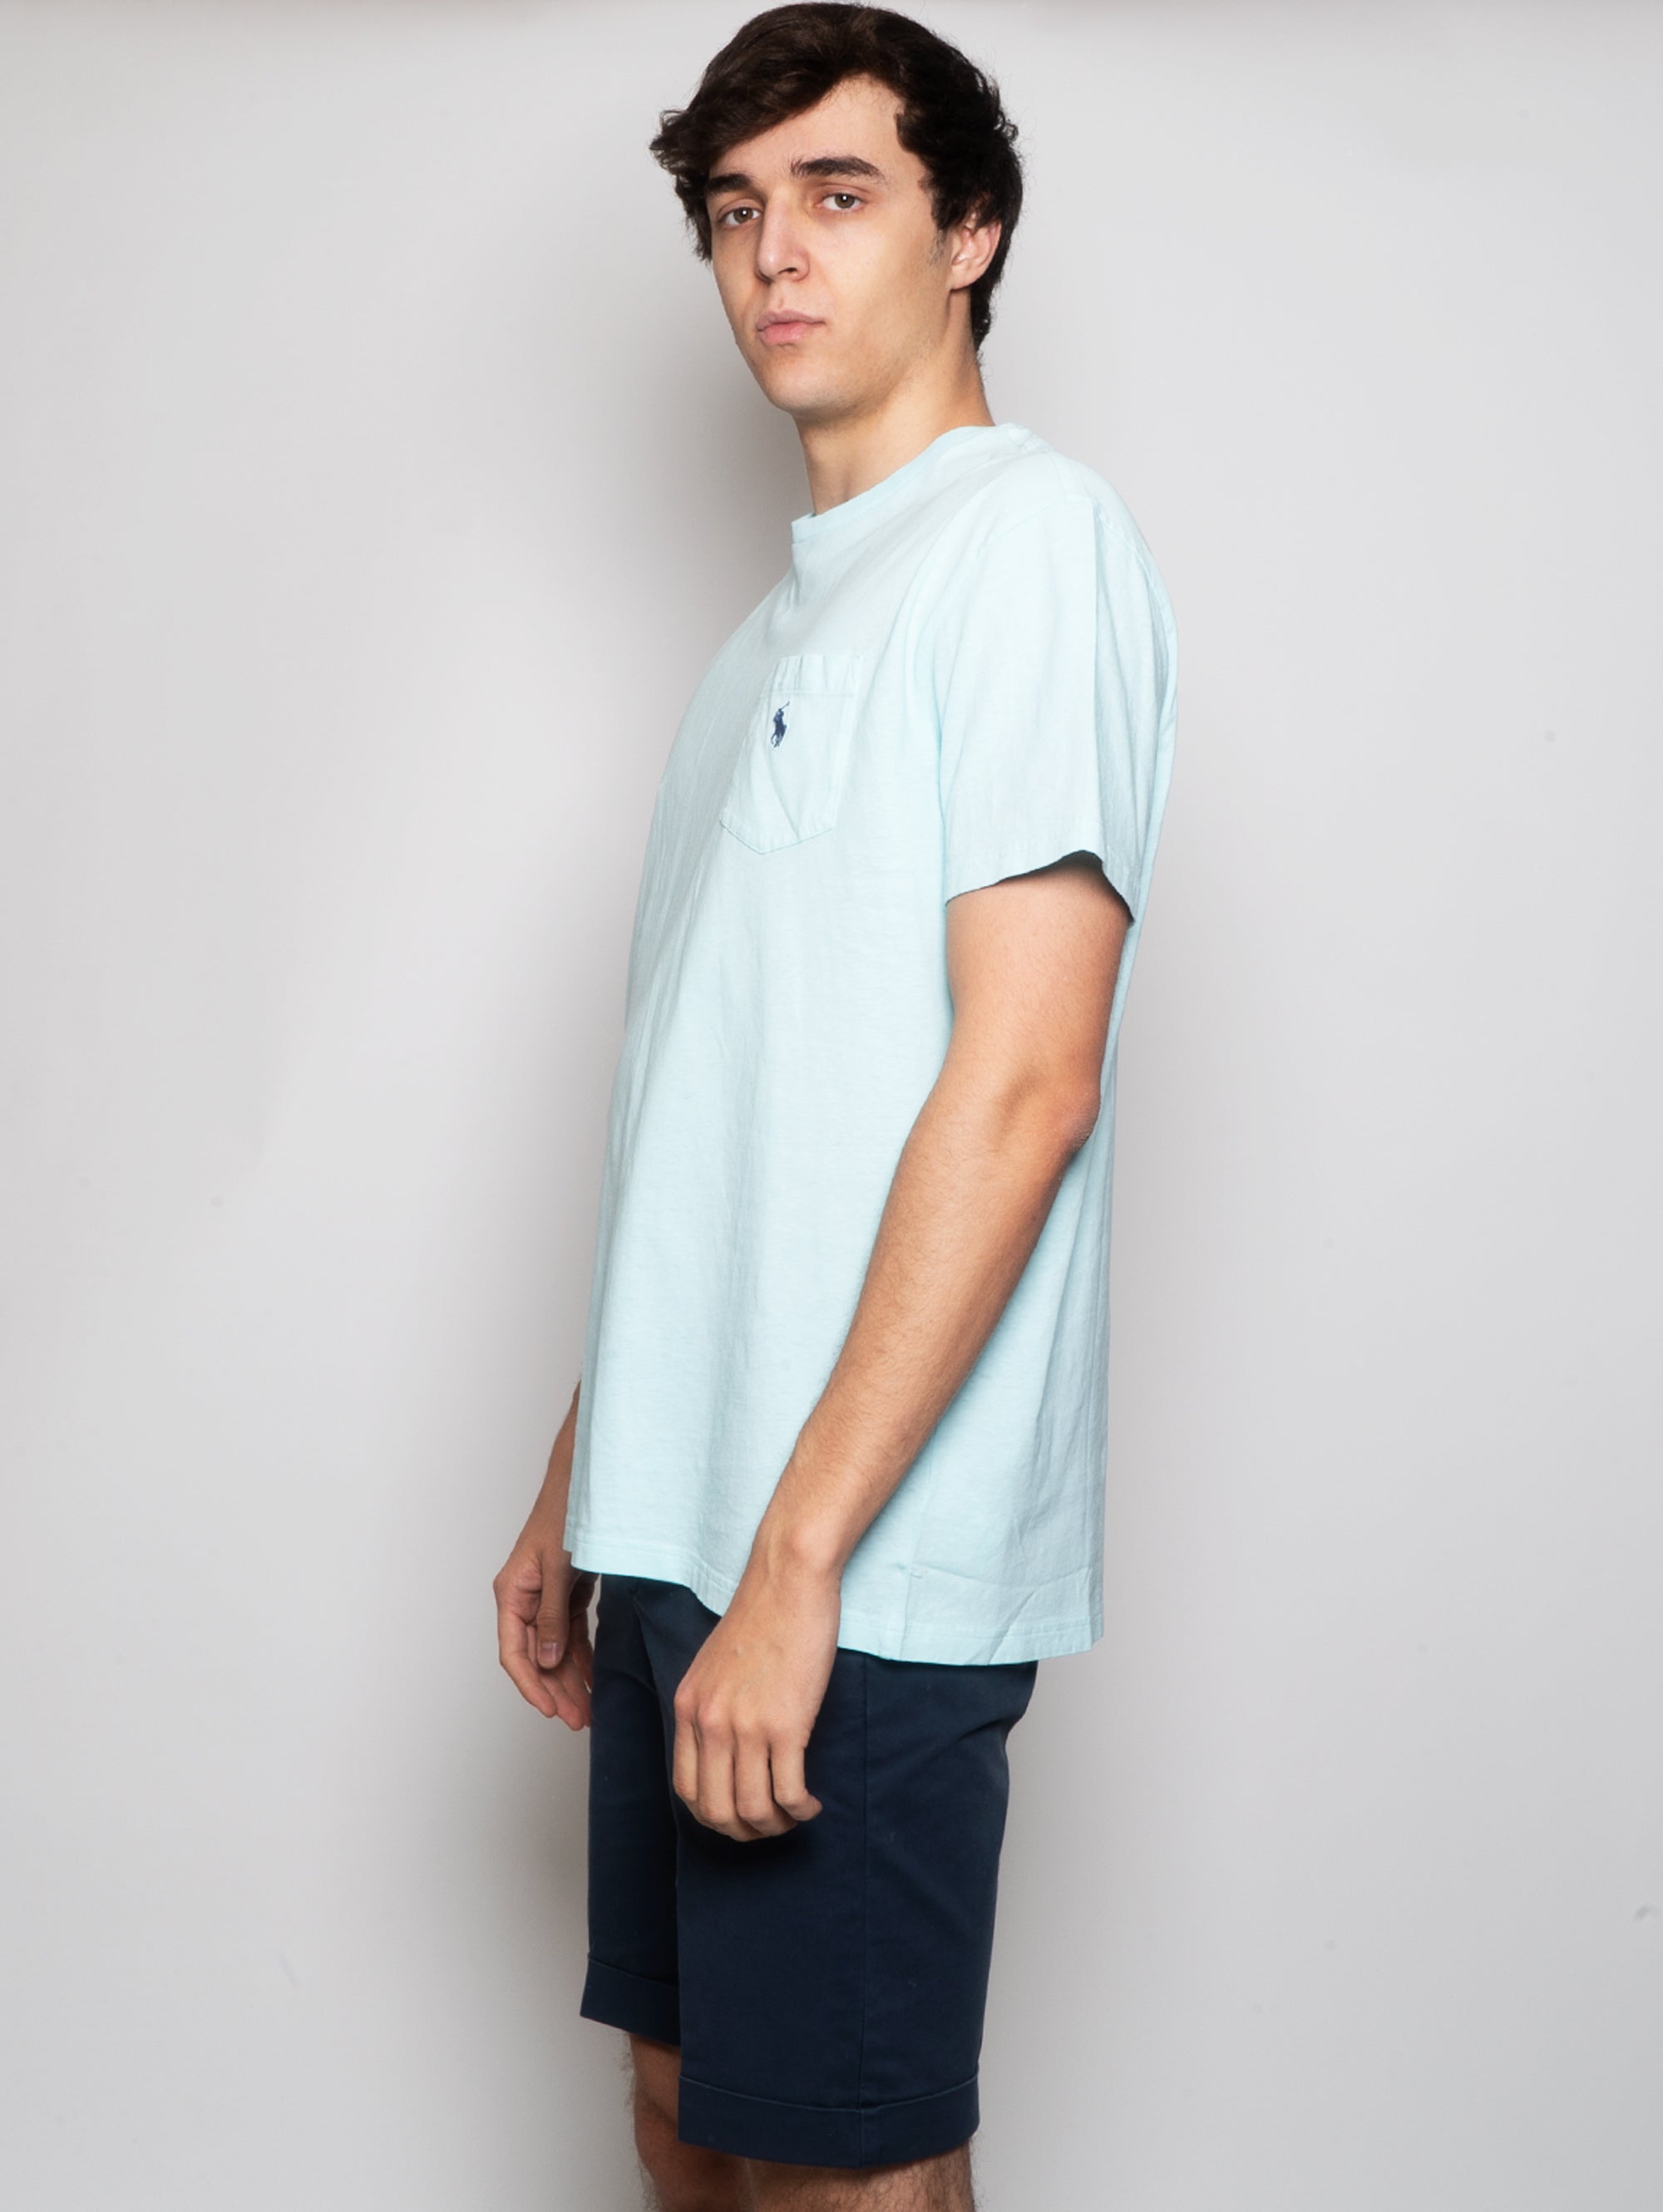 Cotton and Linen T-shirt with Aqua pocket